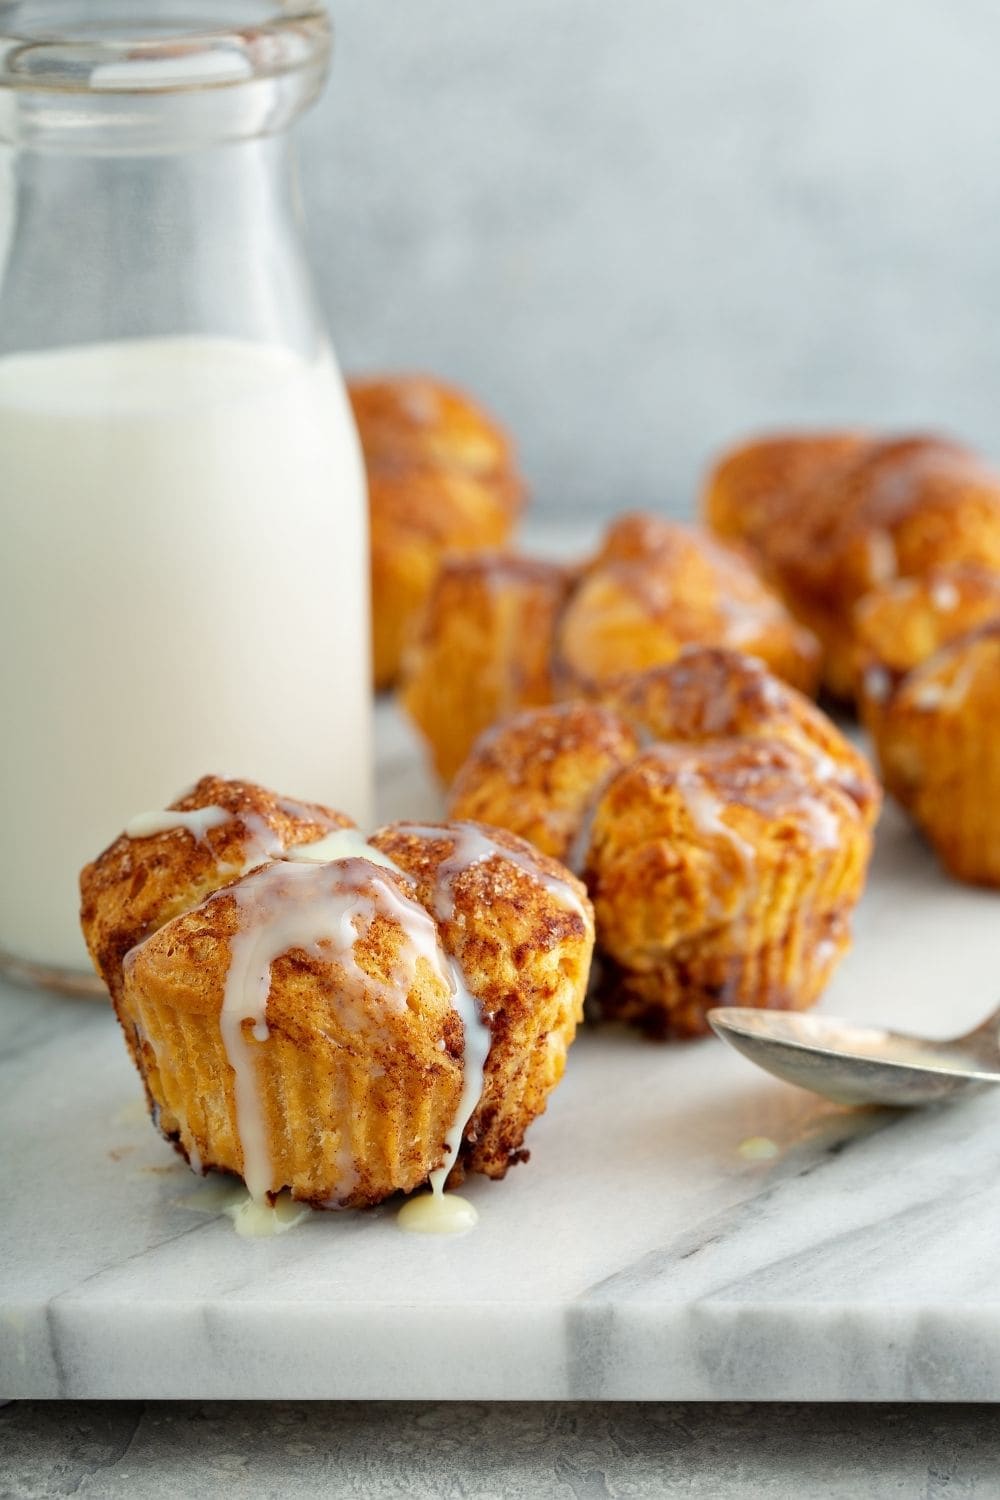 Cinnamon muffins drizzled with sugar glaze. 